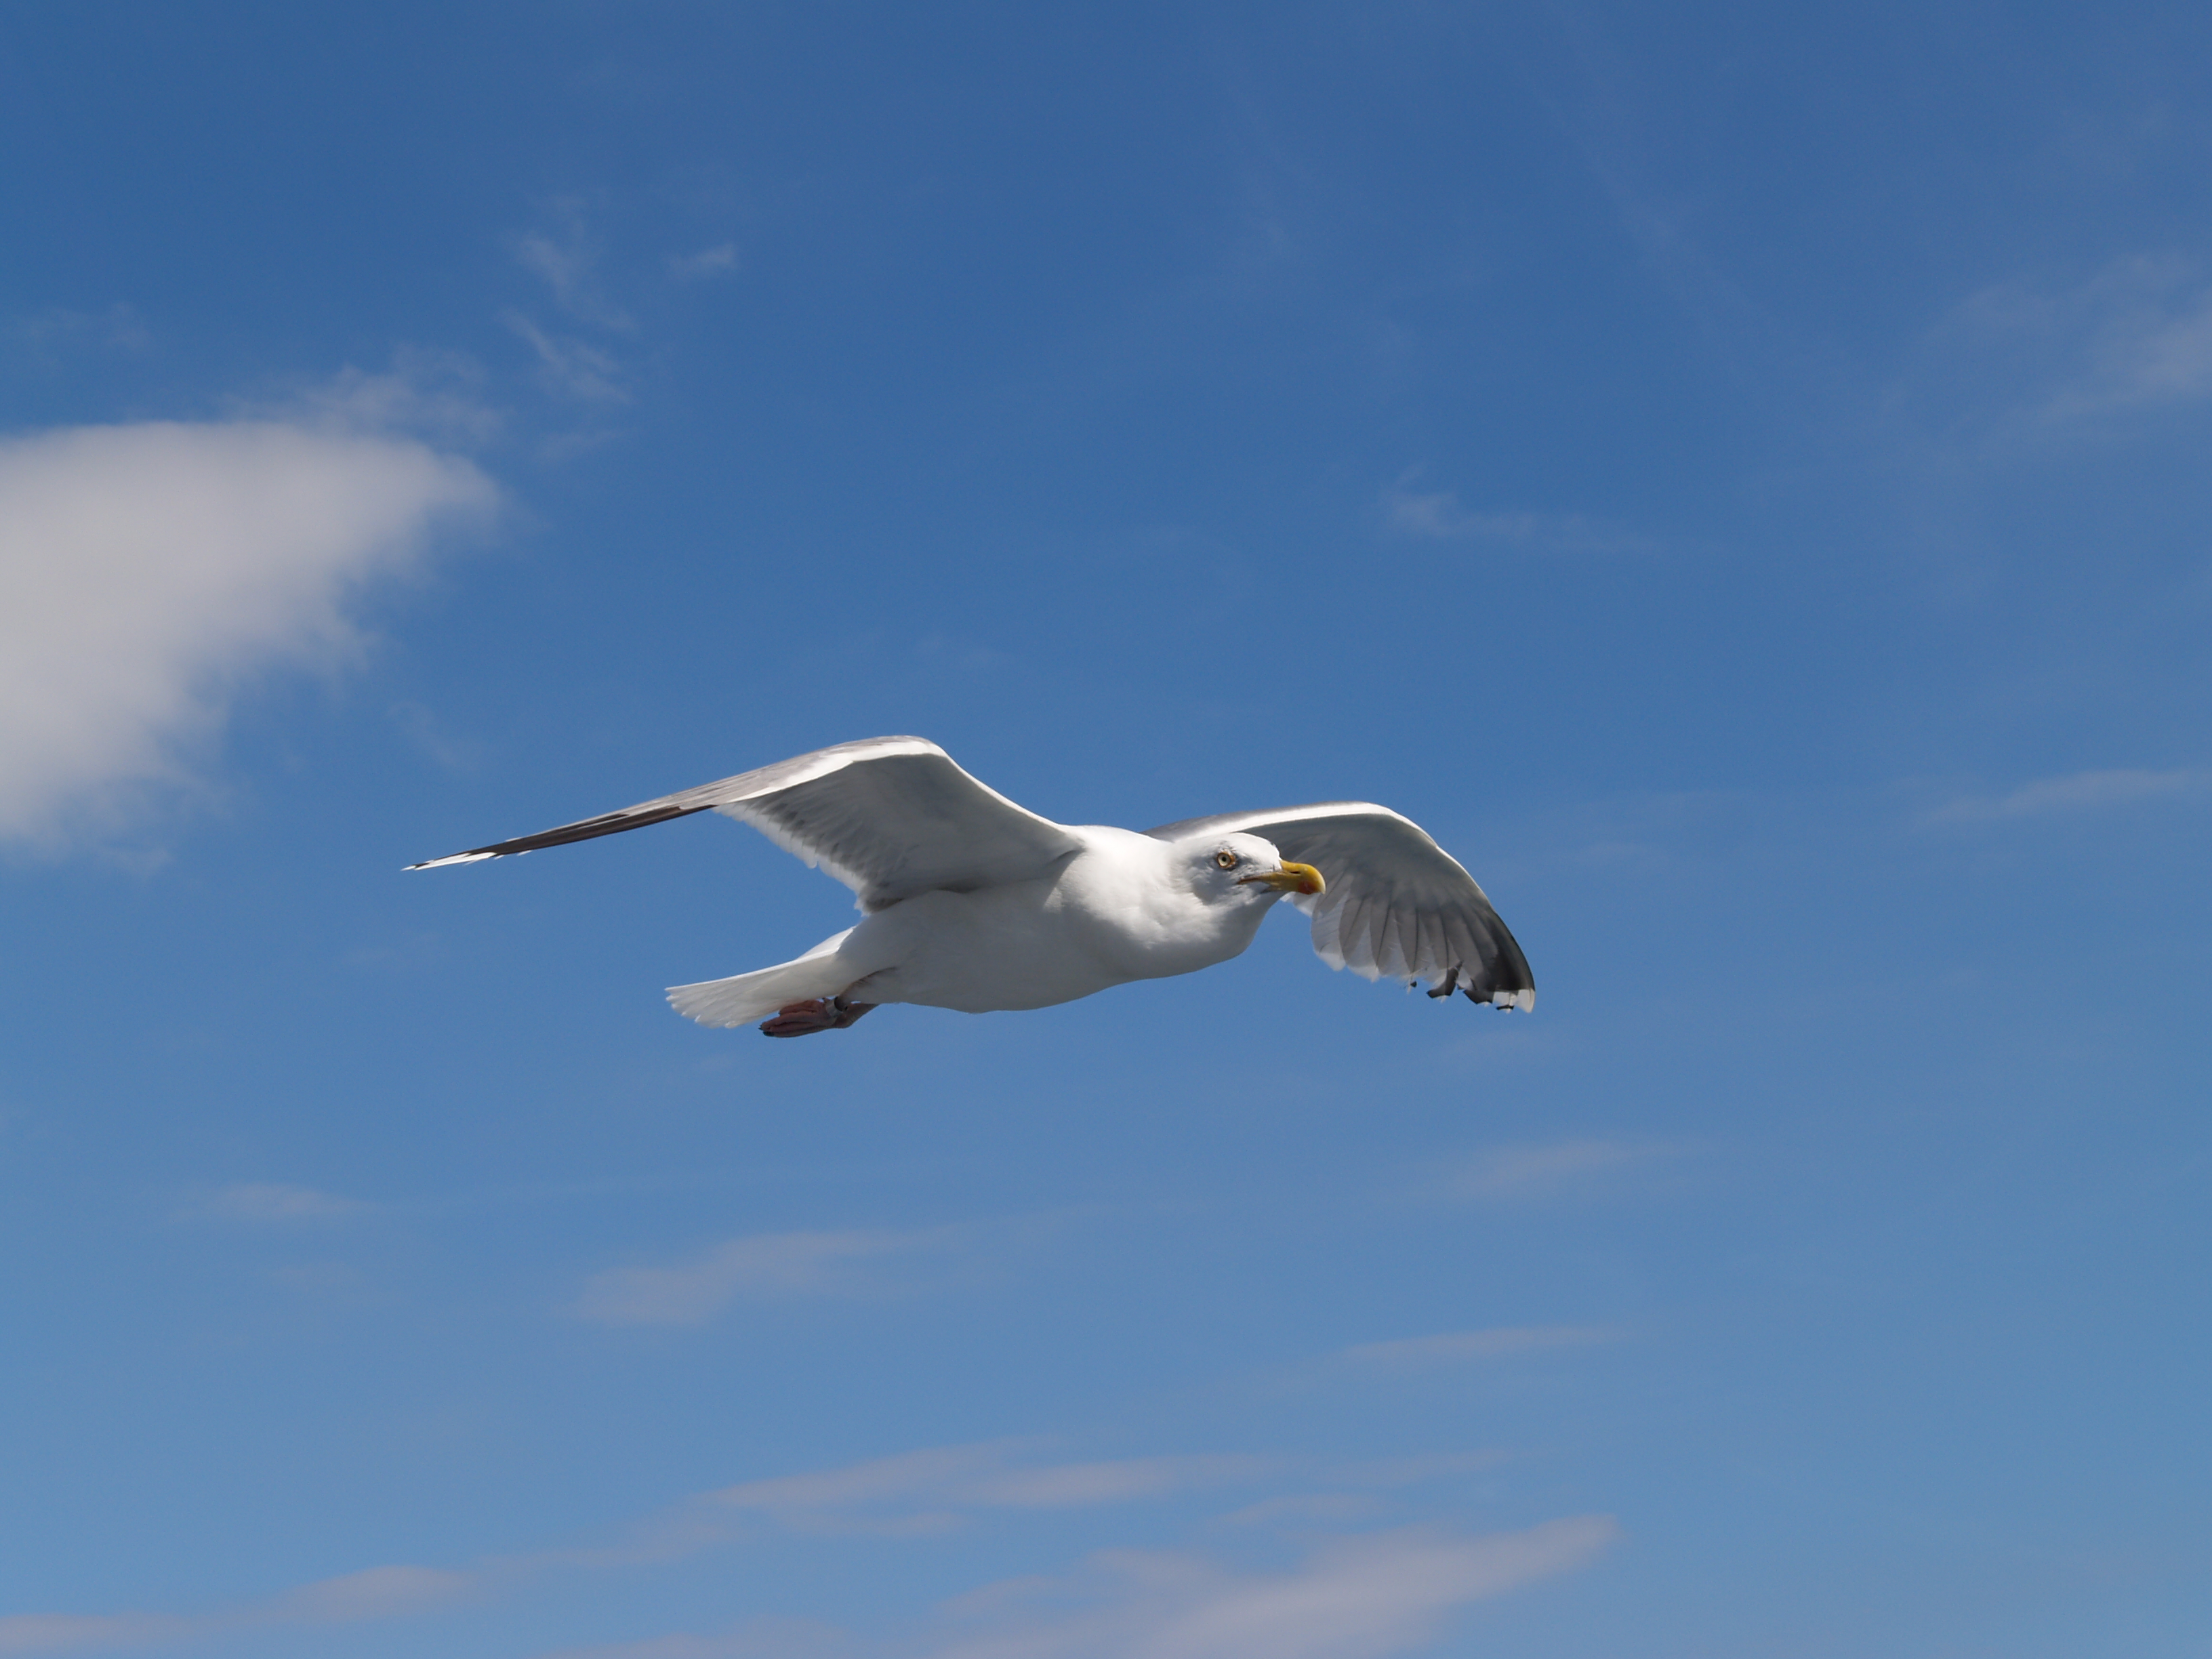 File:Seagull flying (2).jpg - Wikimedia Commons